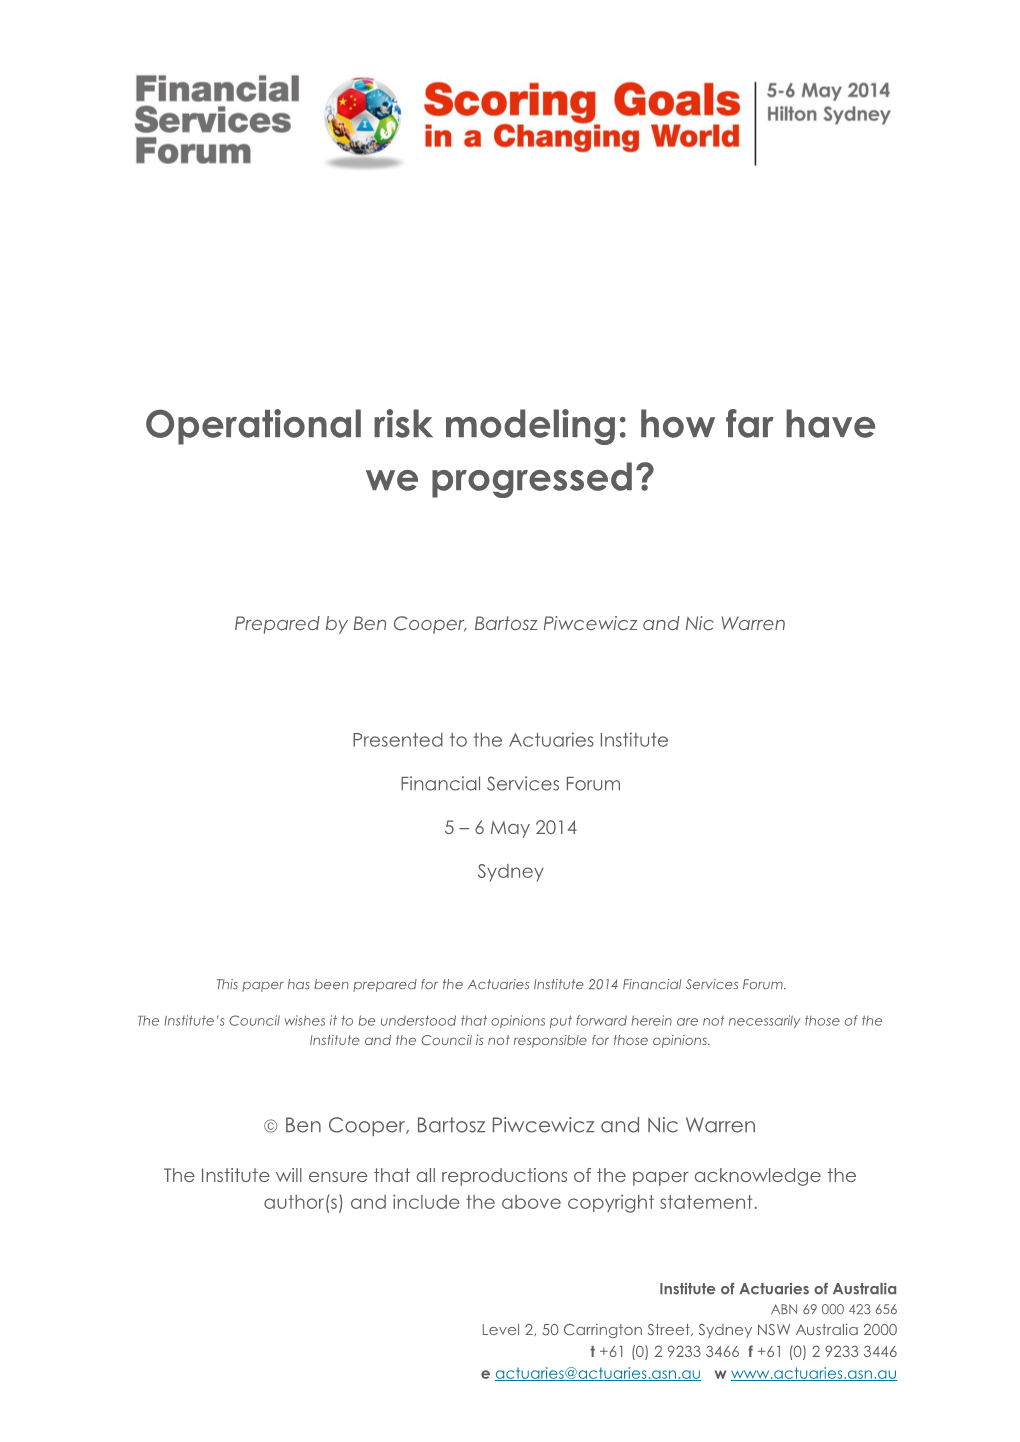 Operational Risk Modeling: How Far Have We Progressed?